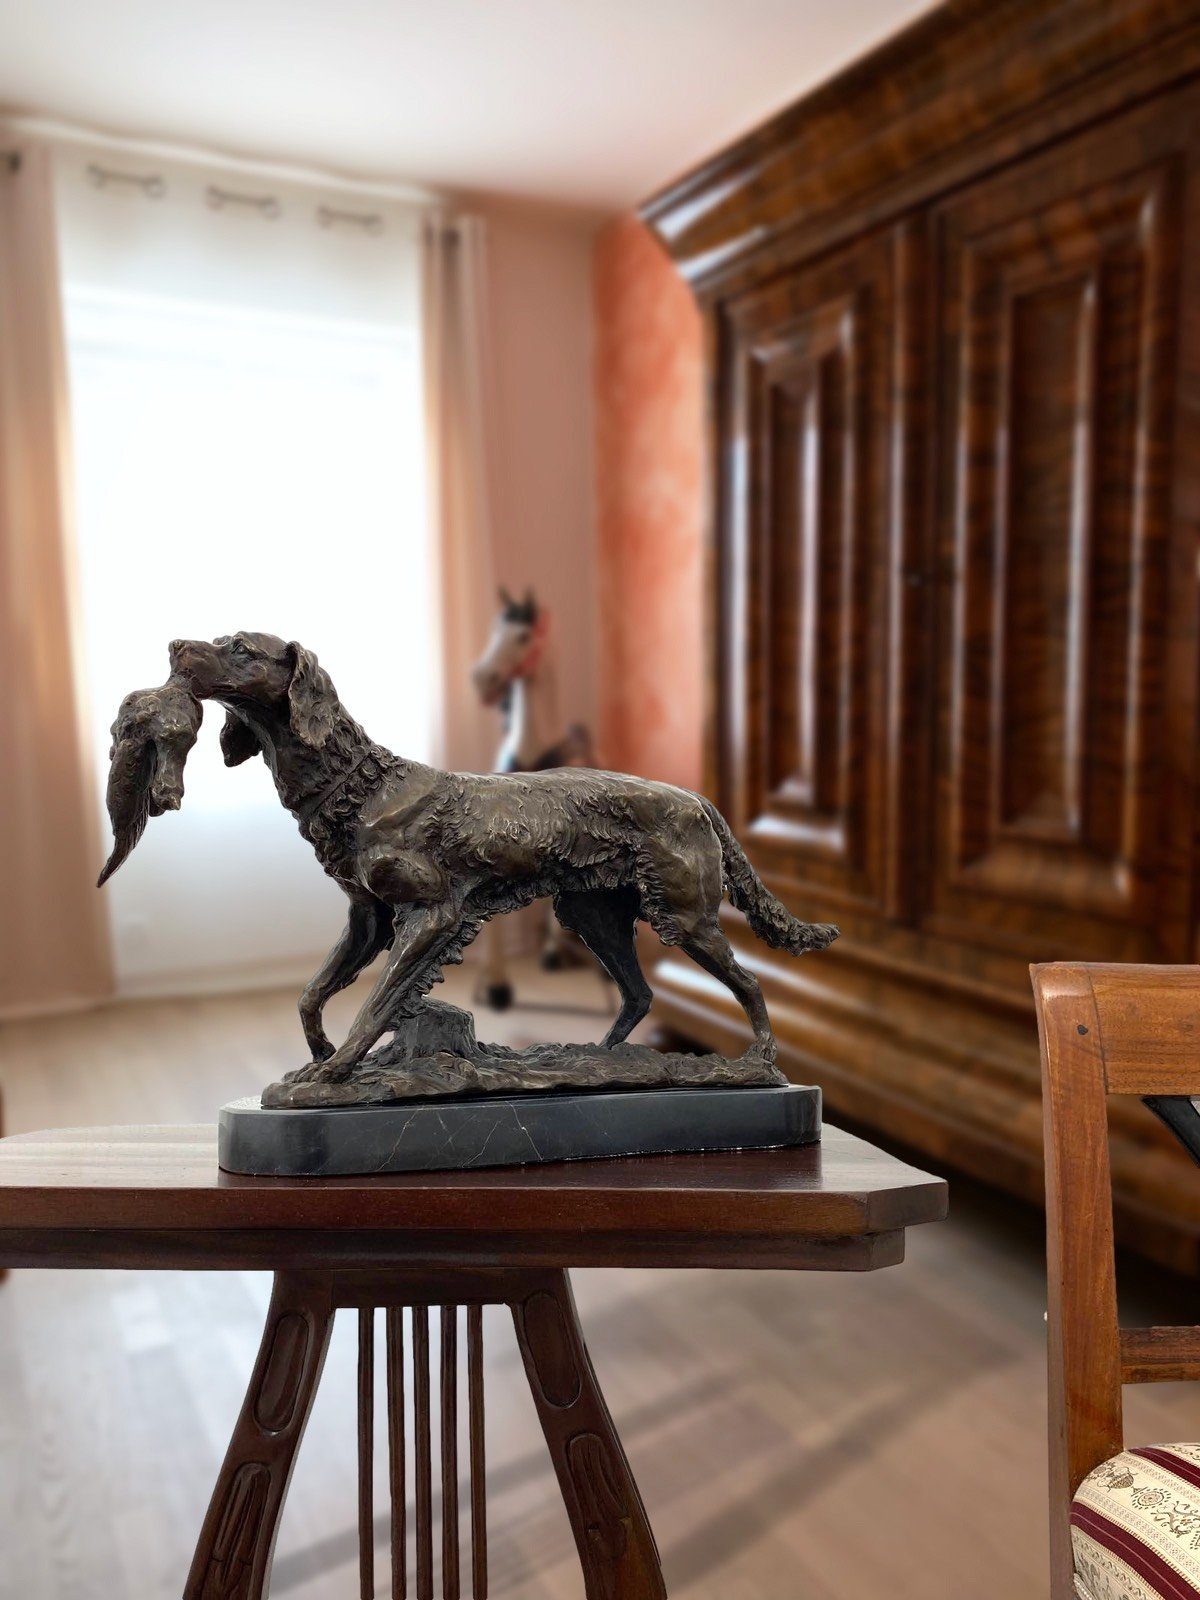 Aubaho Skulptur Bronzeskulptur Hund Bronze Mene Statue Figur nach Antik-Stil Jagdhund